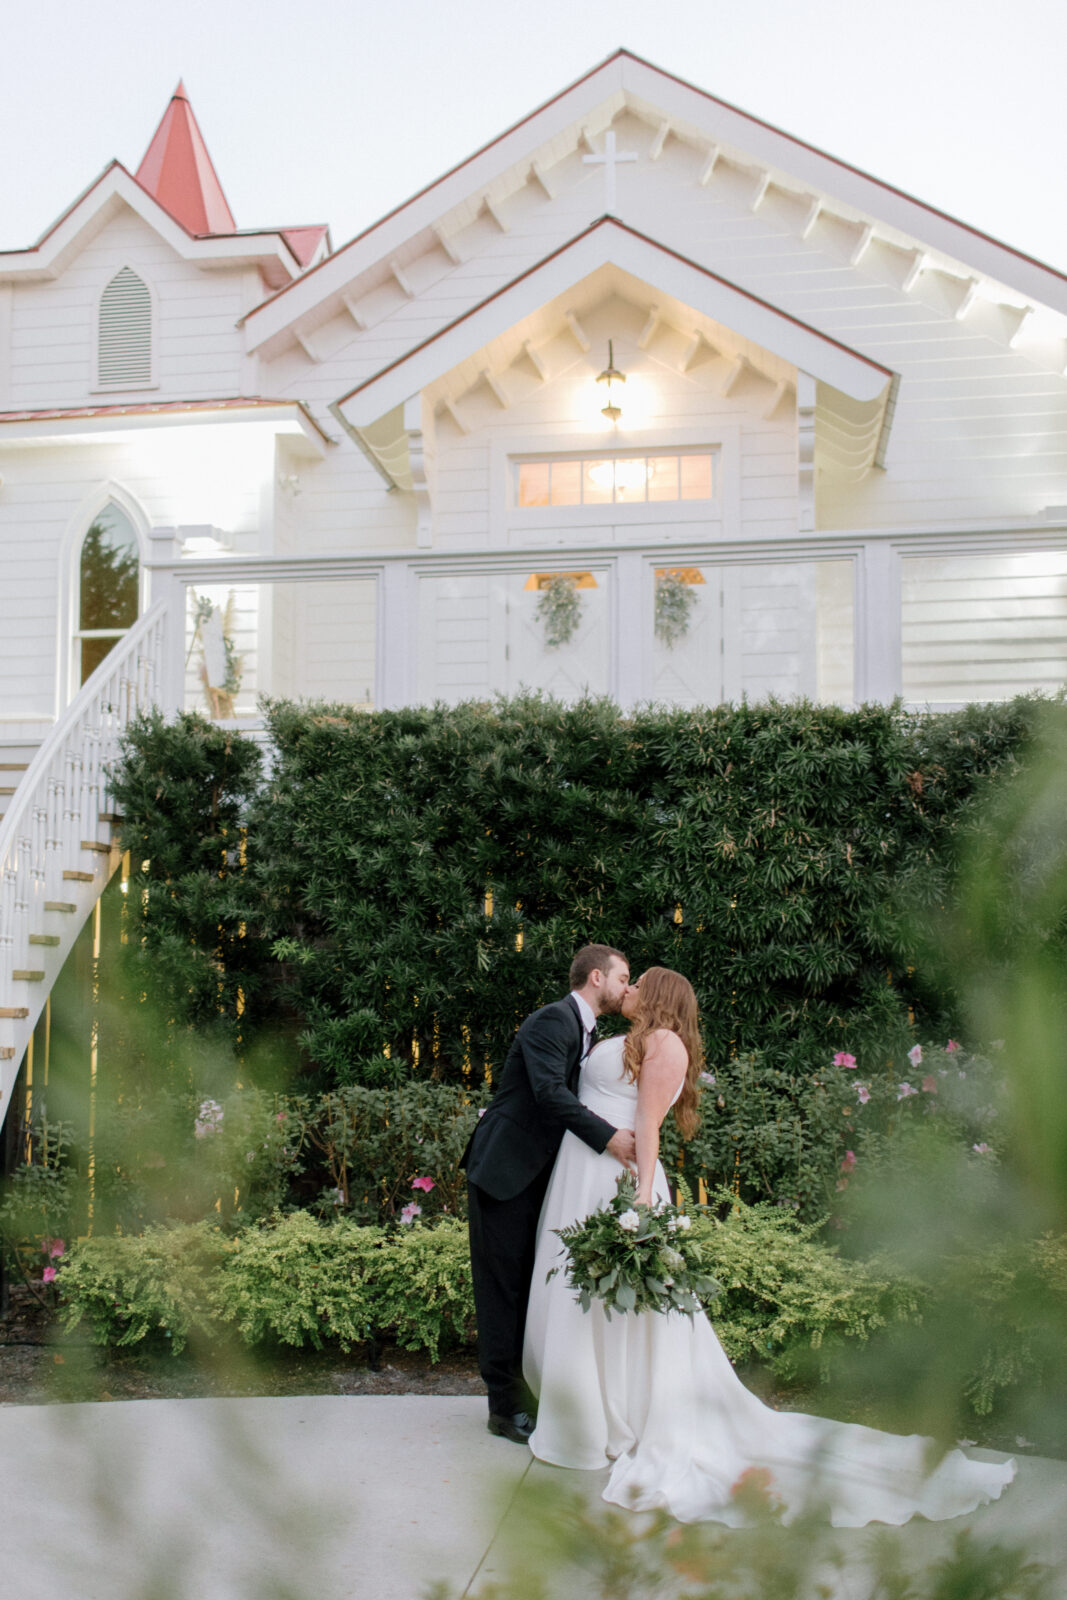 groom dips bride in front of greenery fencing and tybee island wedding chapel